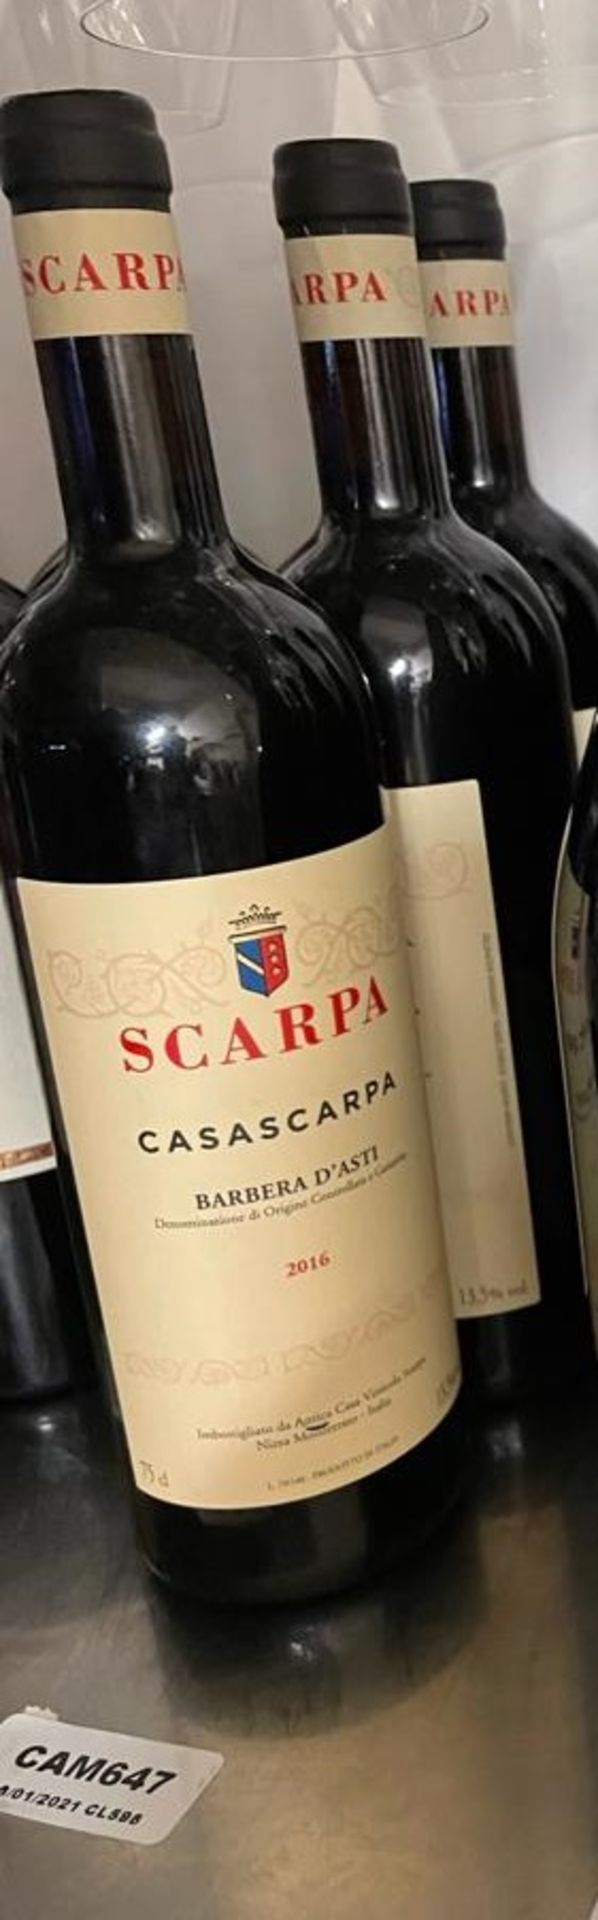 3 x Bottles Of SCARPA BARBERA D'ASTI 2016 750ml - New/Unopened Restaurant Stock - Ref: CAM647